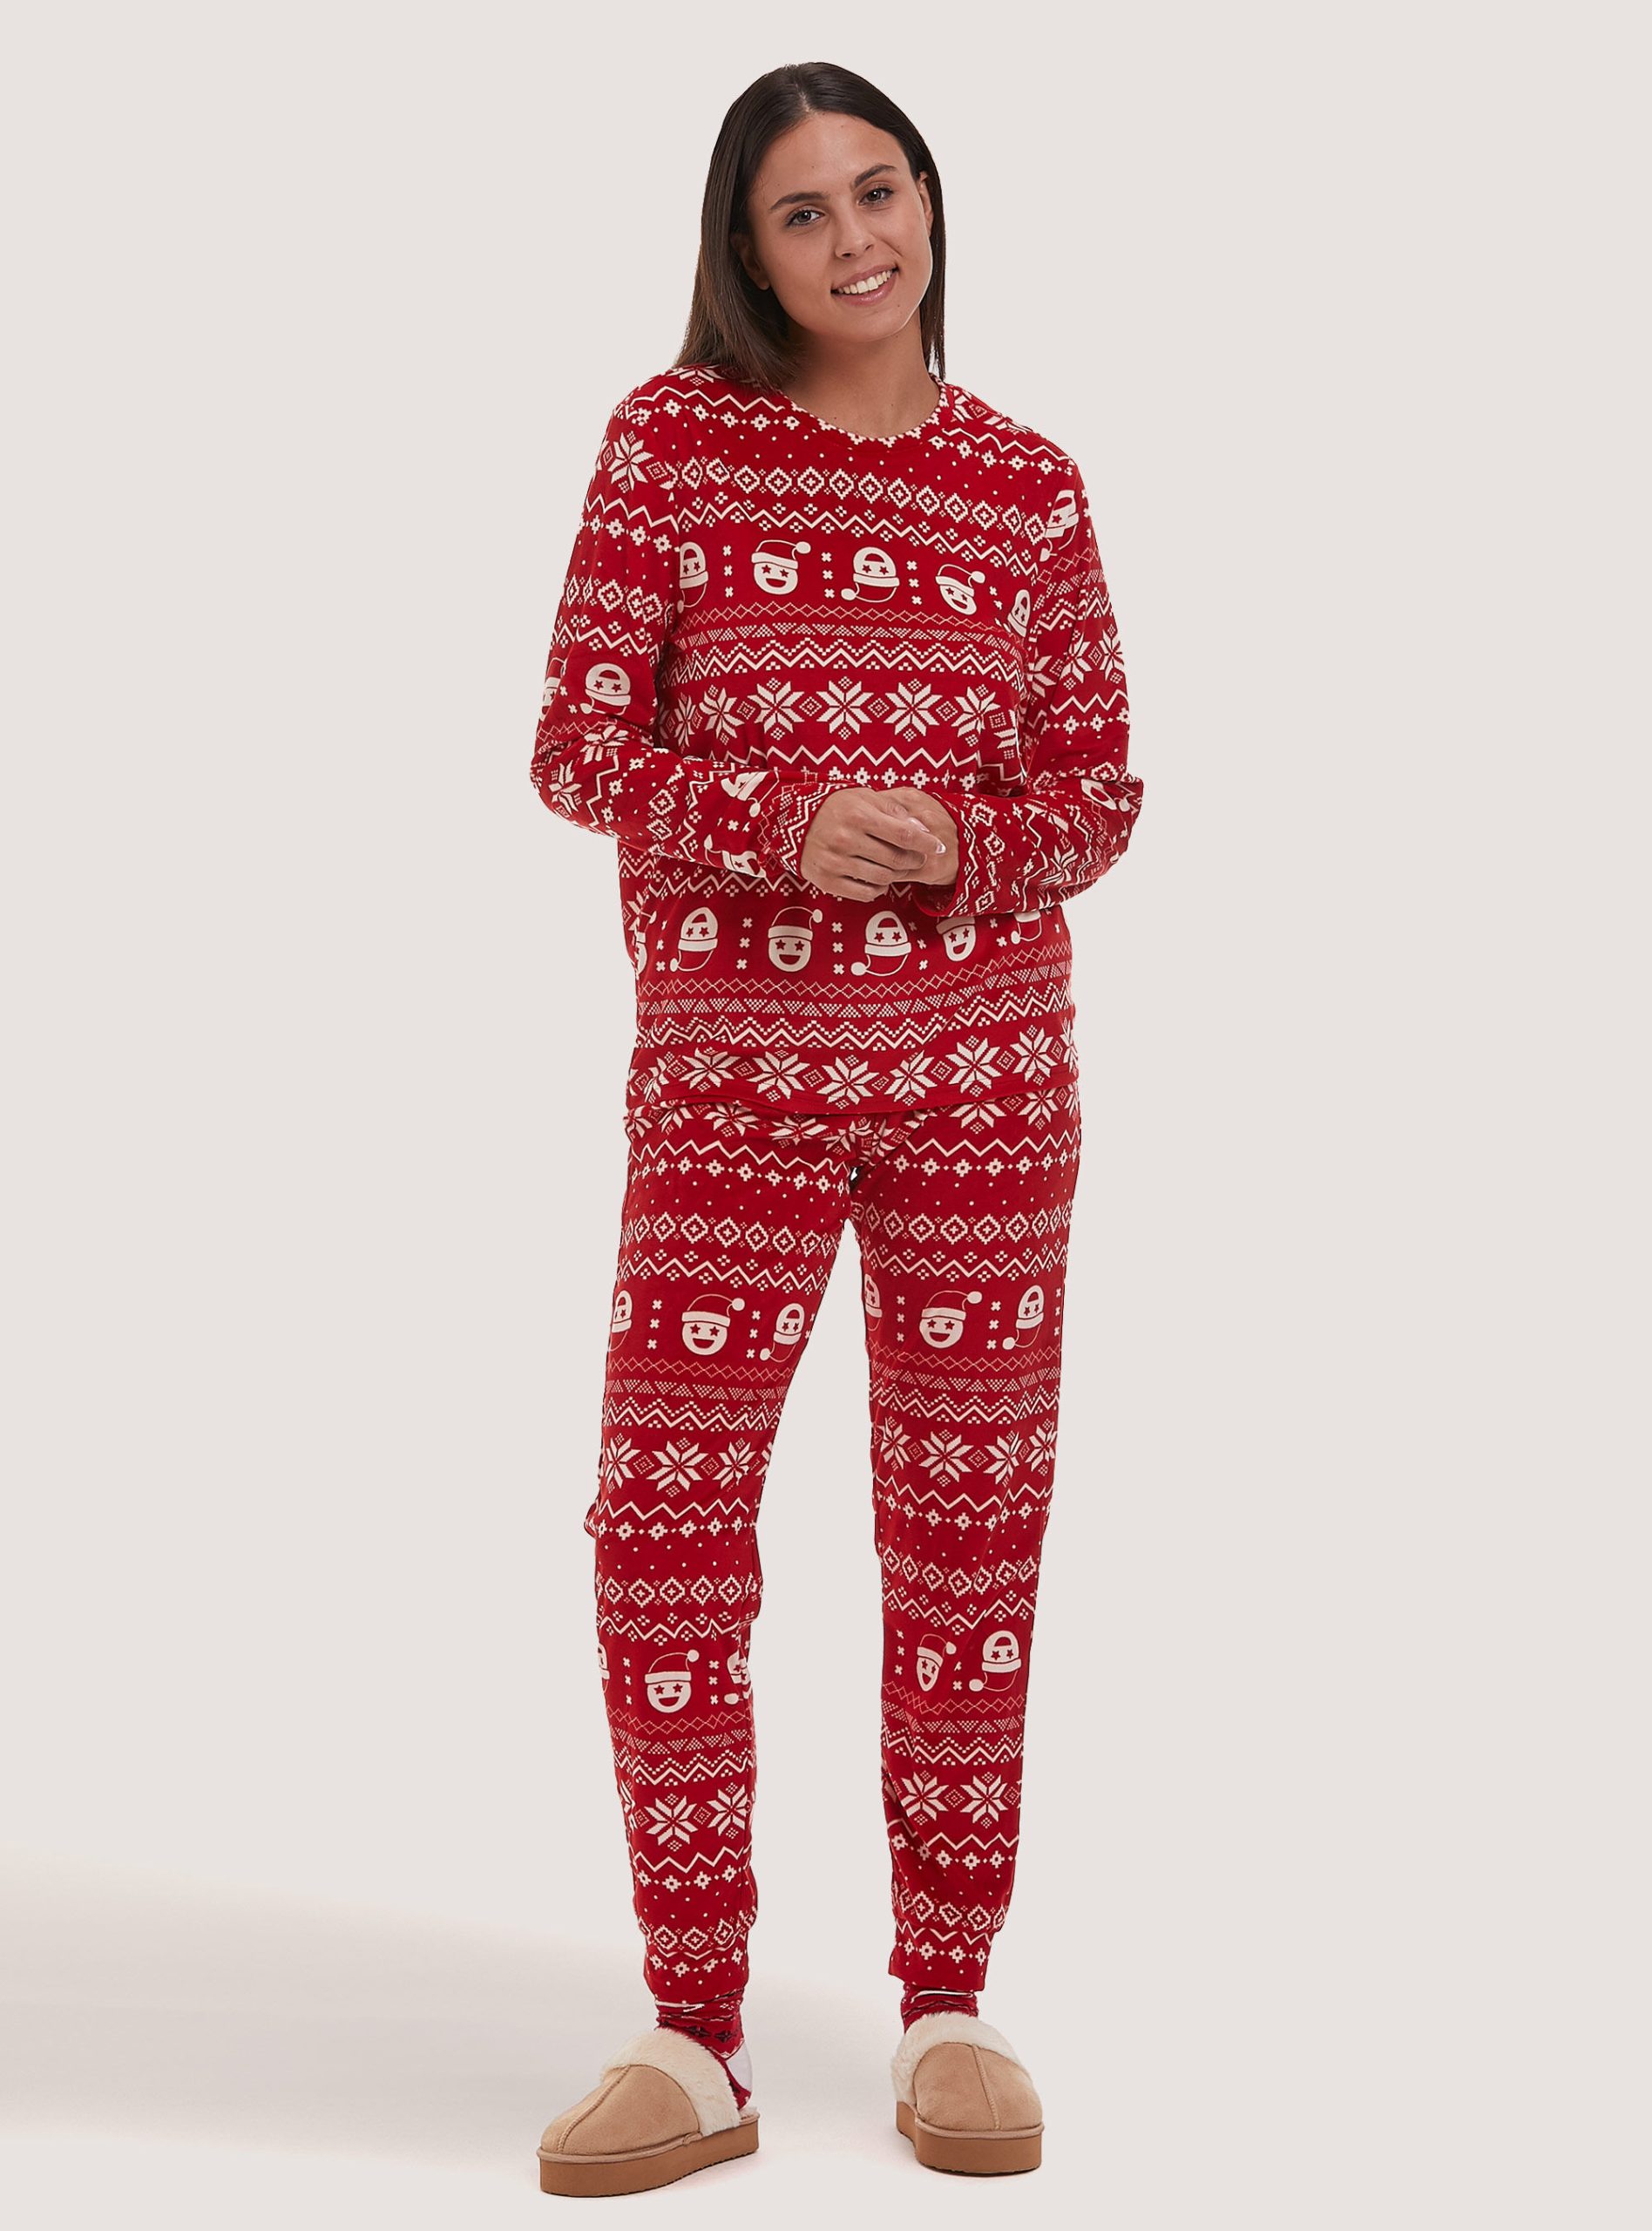 Frauen Pijamas Christmas Family Collection All Over Pyjamas Rd2 Red Medium Konsumgut Alcott – 1